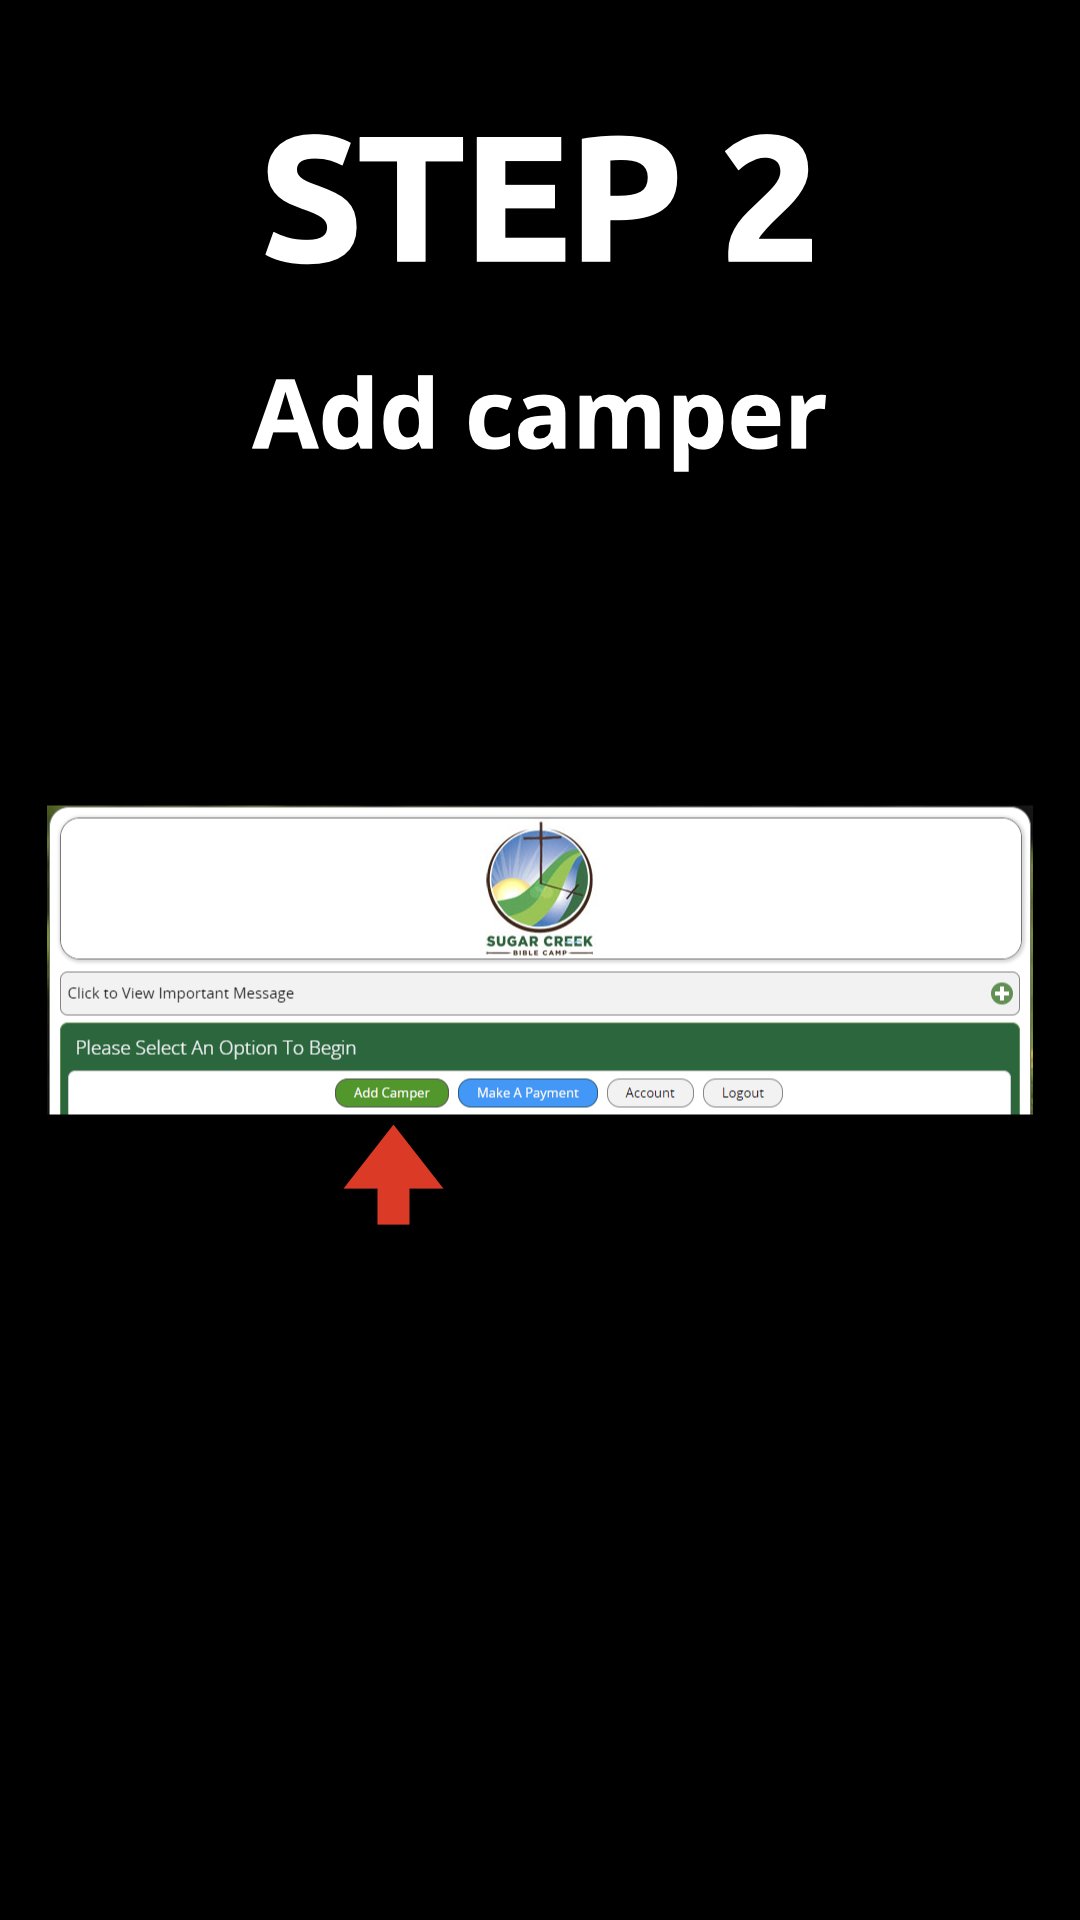  Click the  Add Camper  button 